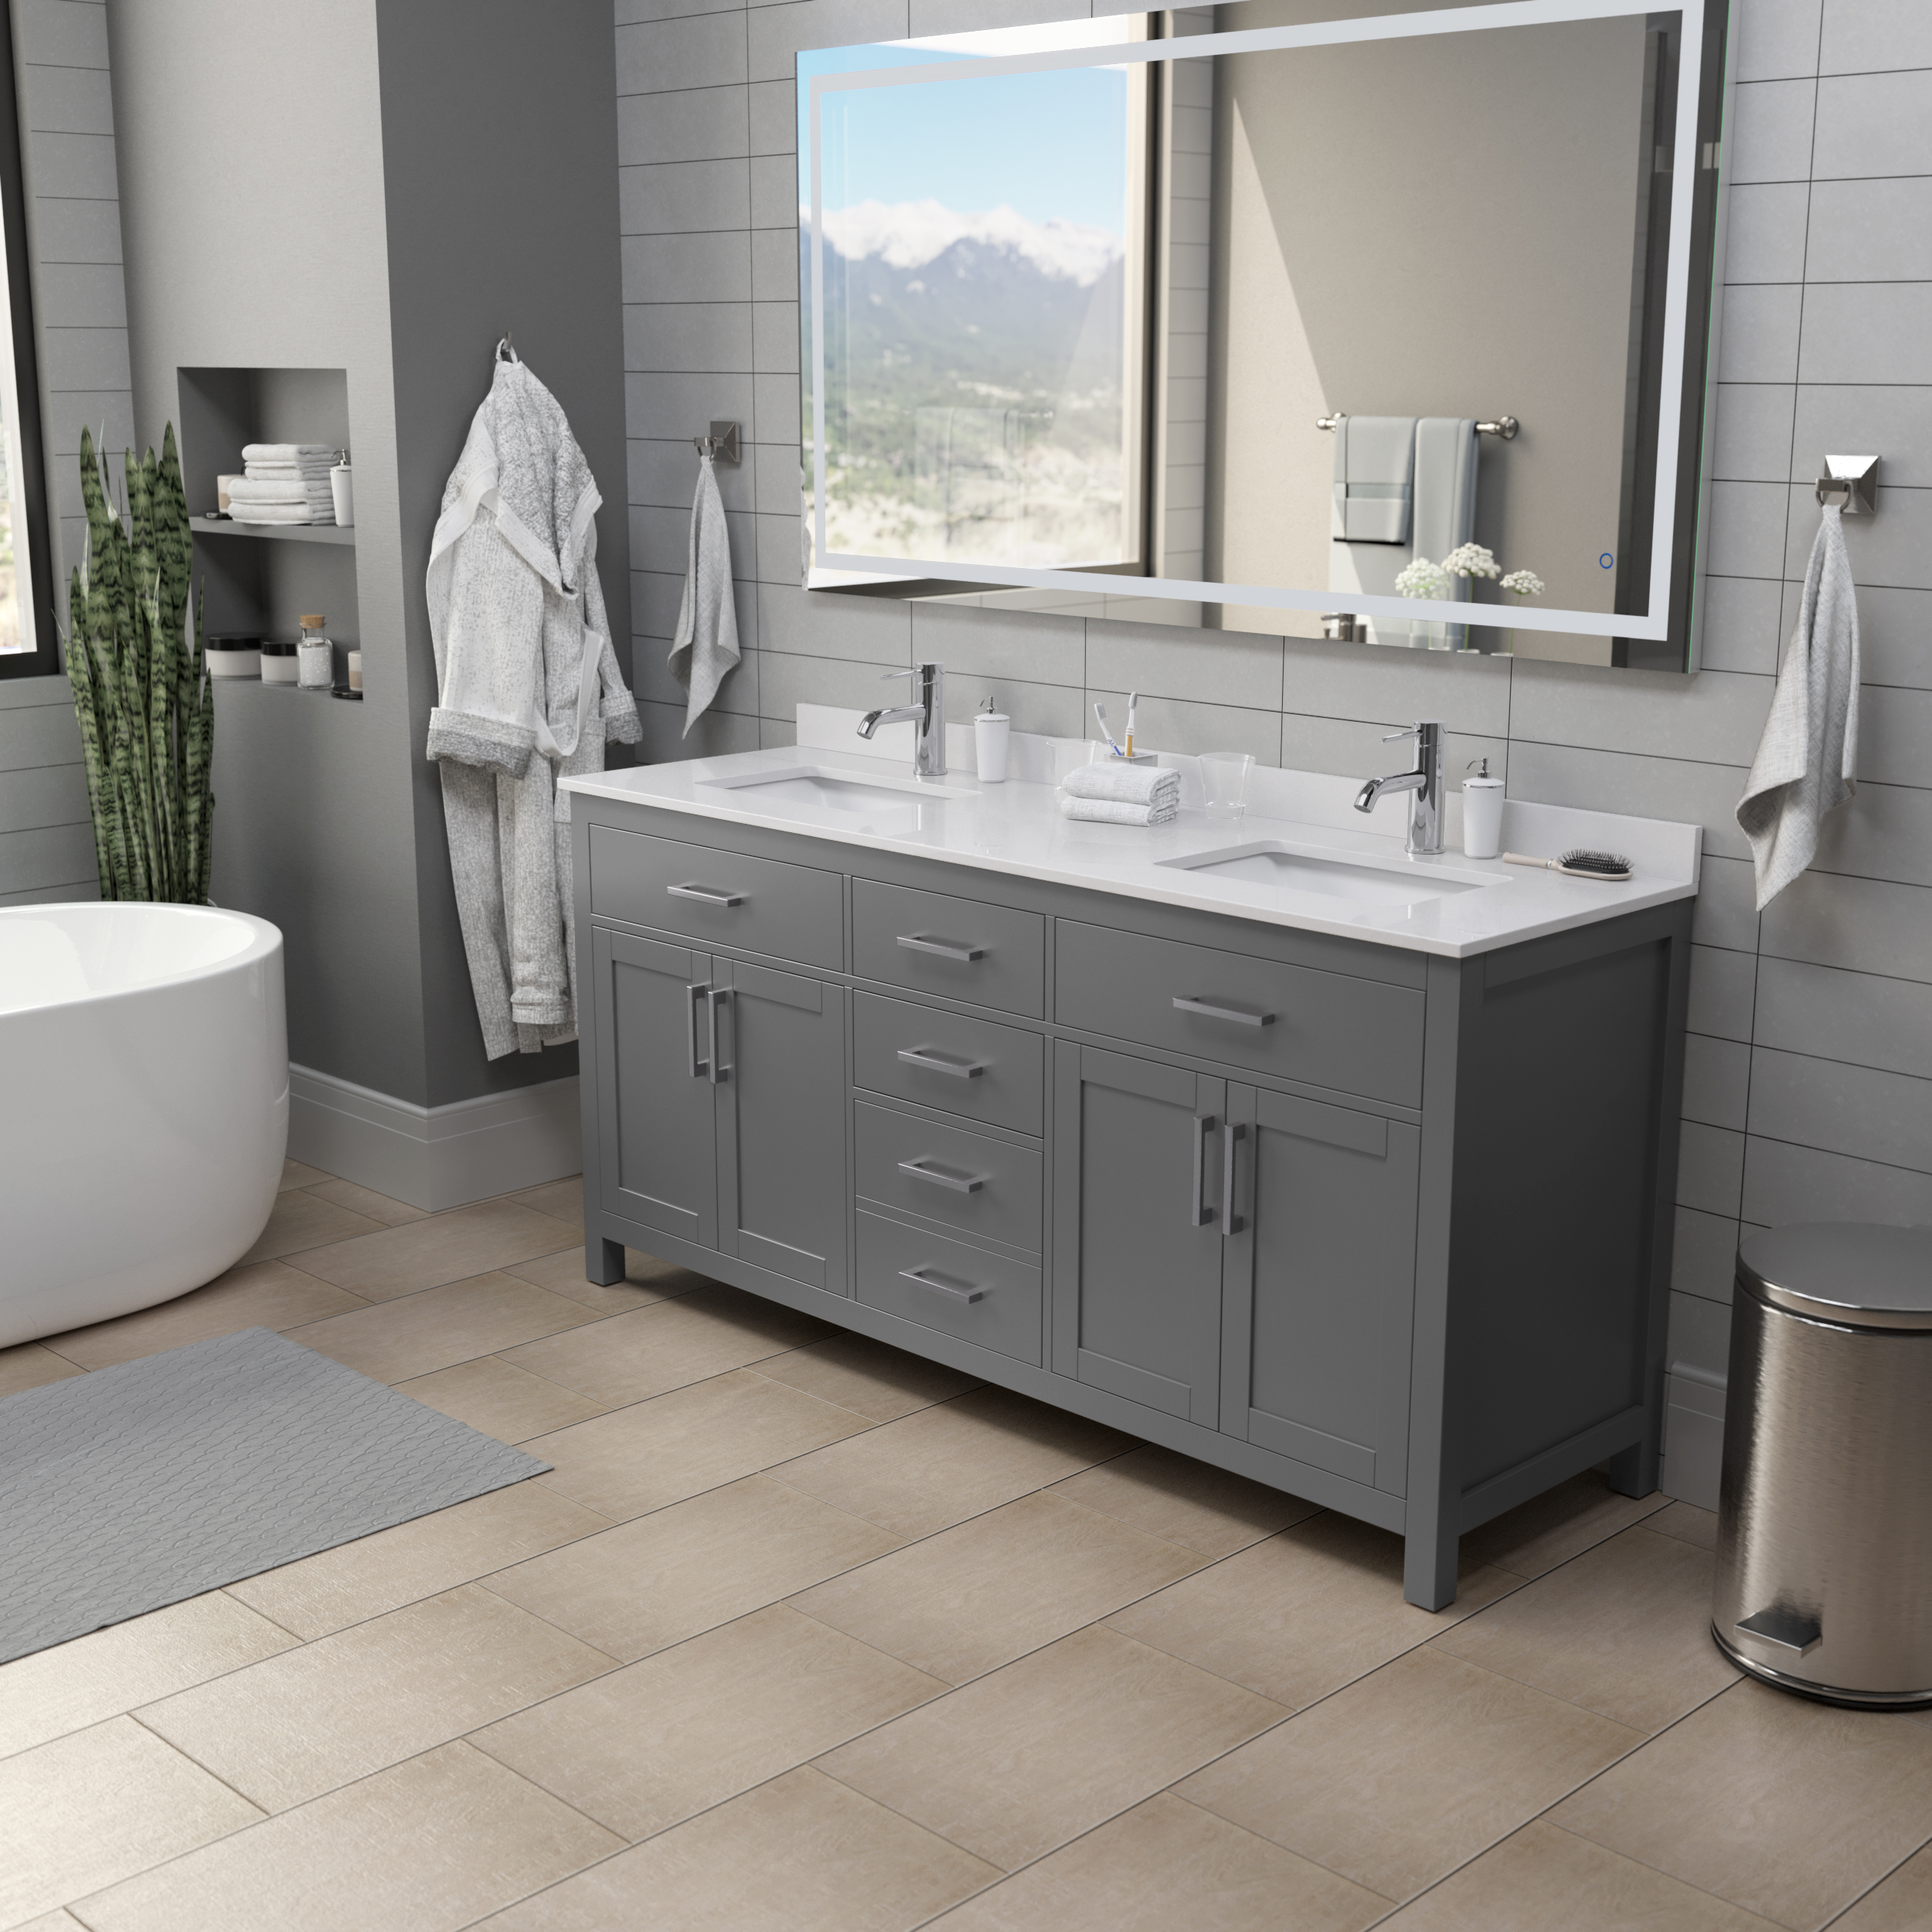 bathroom with Wyndham Becketts oak vanity in dgray color 